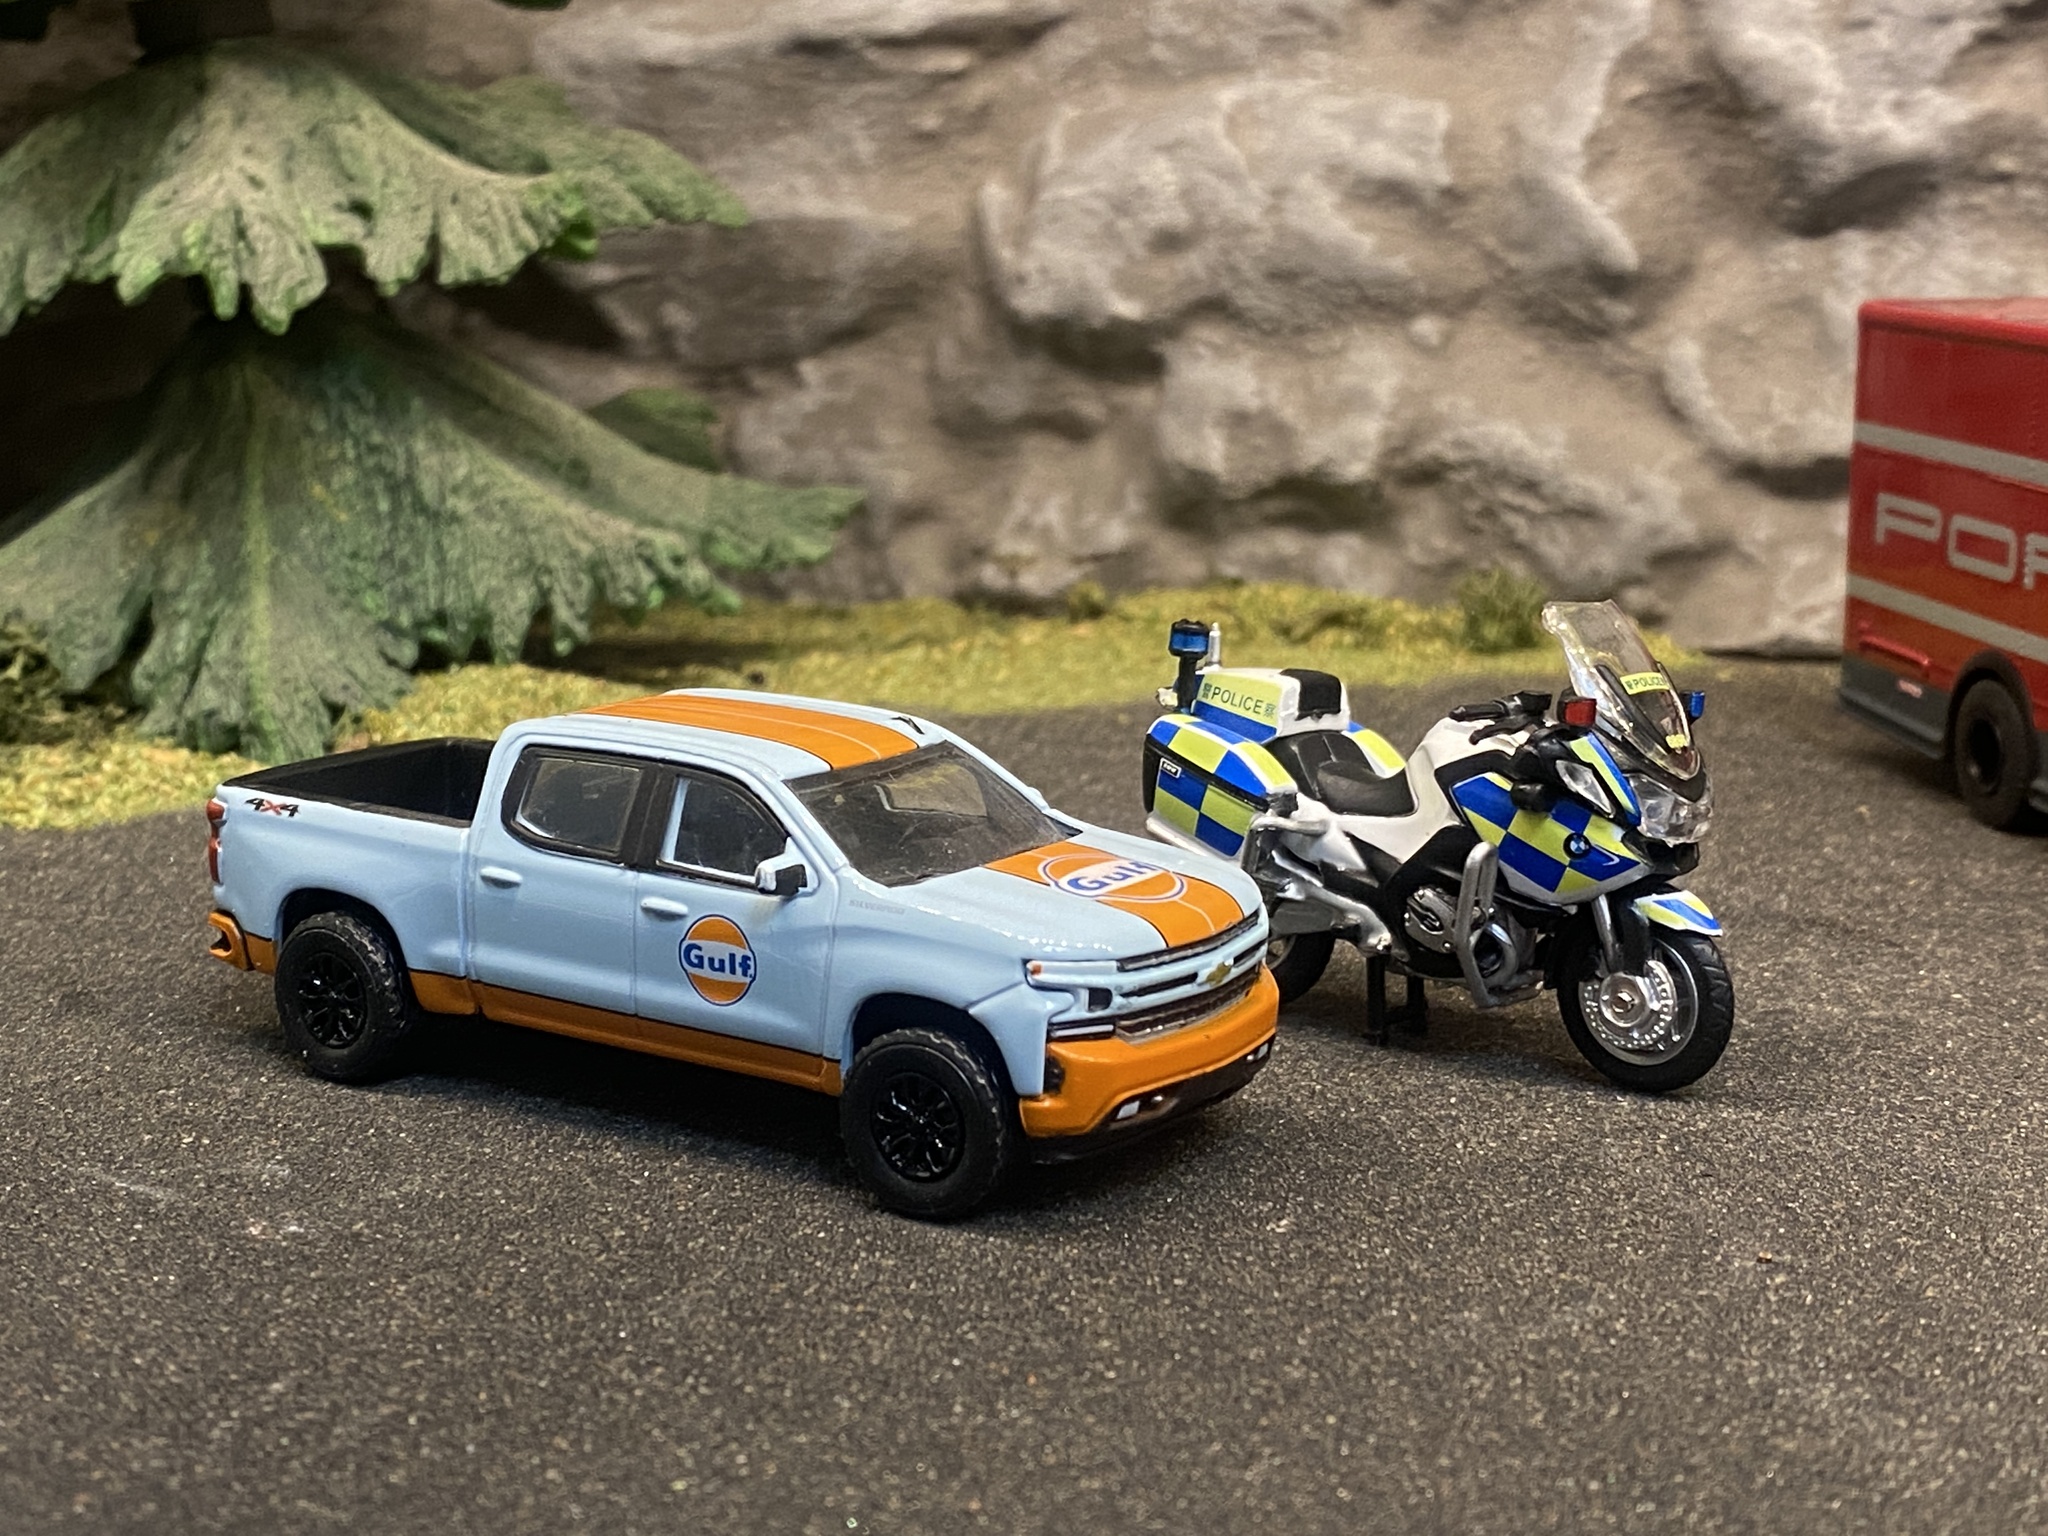 Skala 1/64 BMW Police Motorcycle - Hong Kong Police fr Tiny Toys